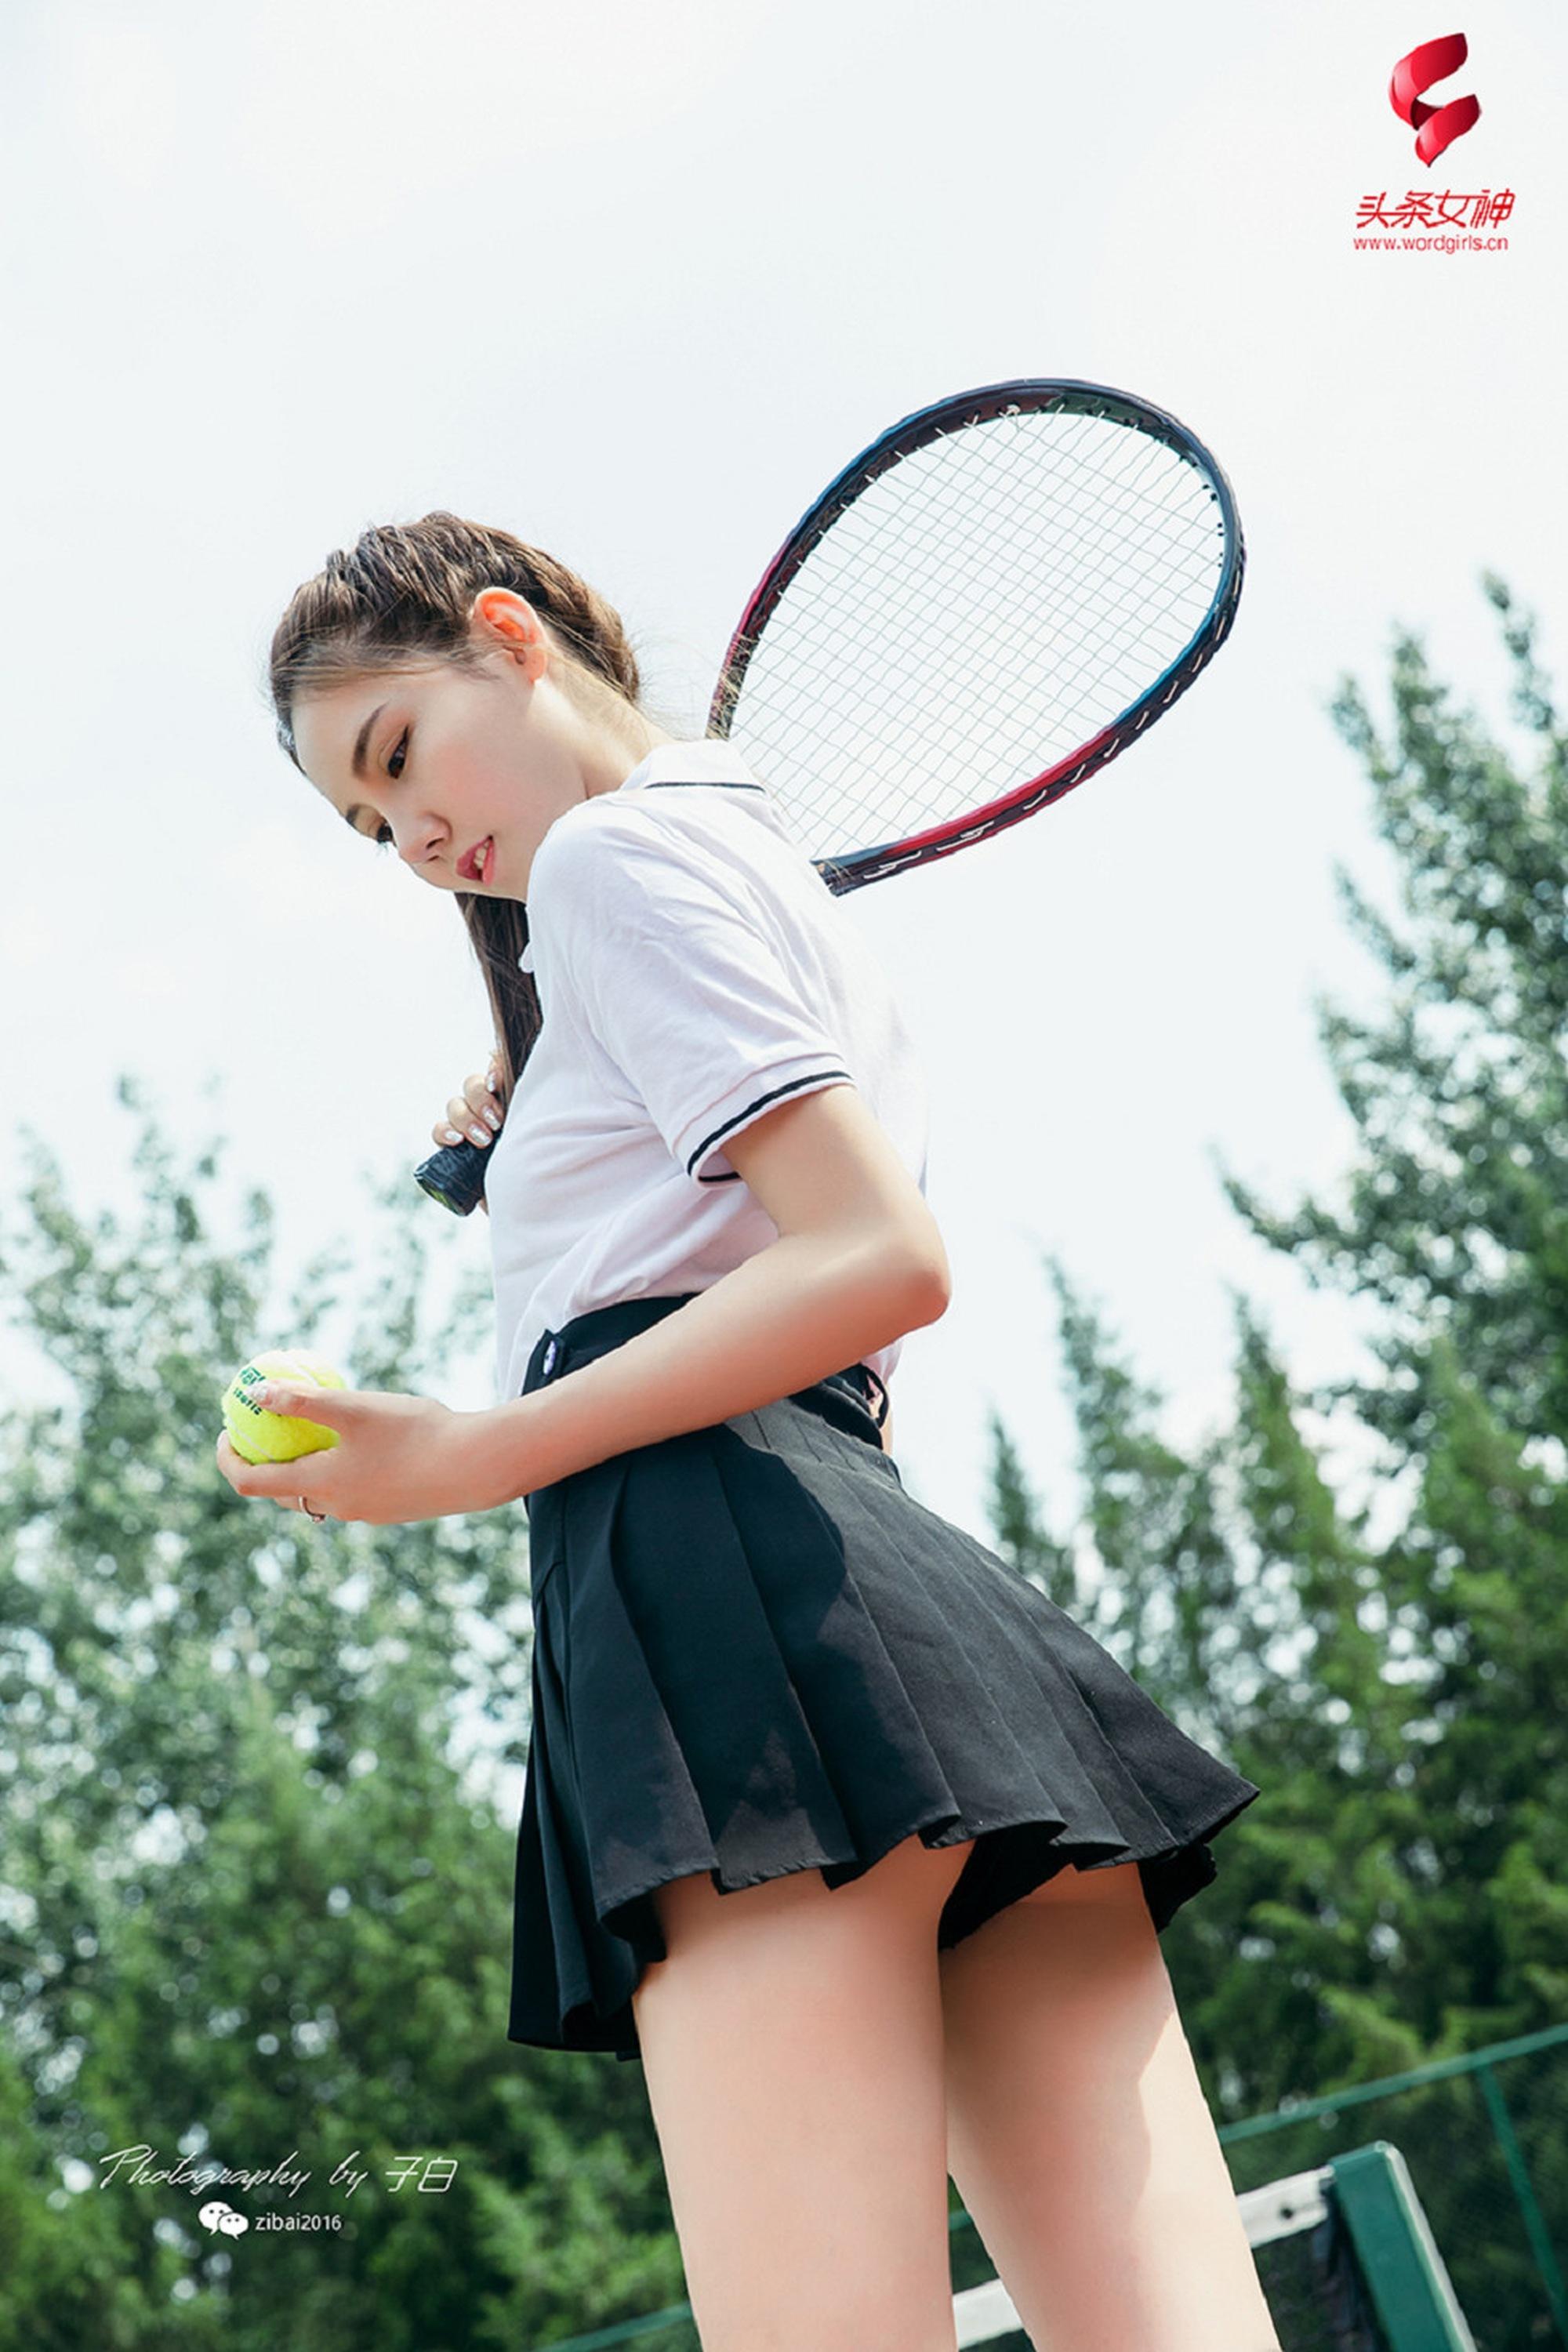 TouTiao头条女神 2019.07.13 莎伦 我是网球美少女 - 15.jpg